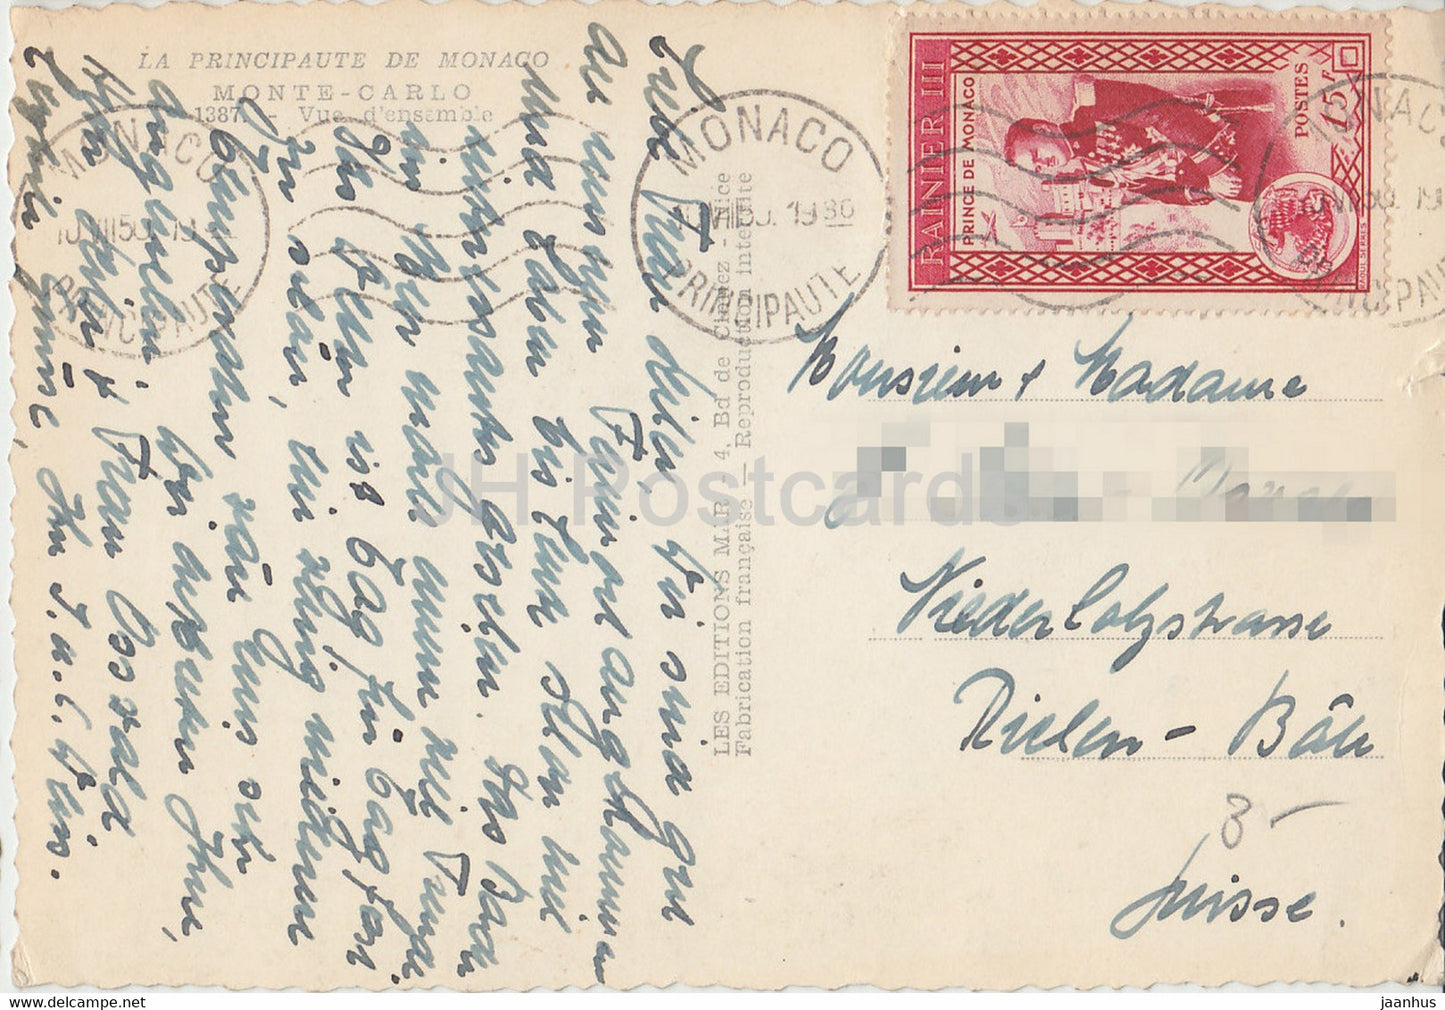 Monte Carlo - Vue d'ensemble - 1387 - alte Postkarte - 1950 - Monaco - gebraucht